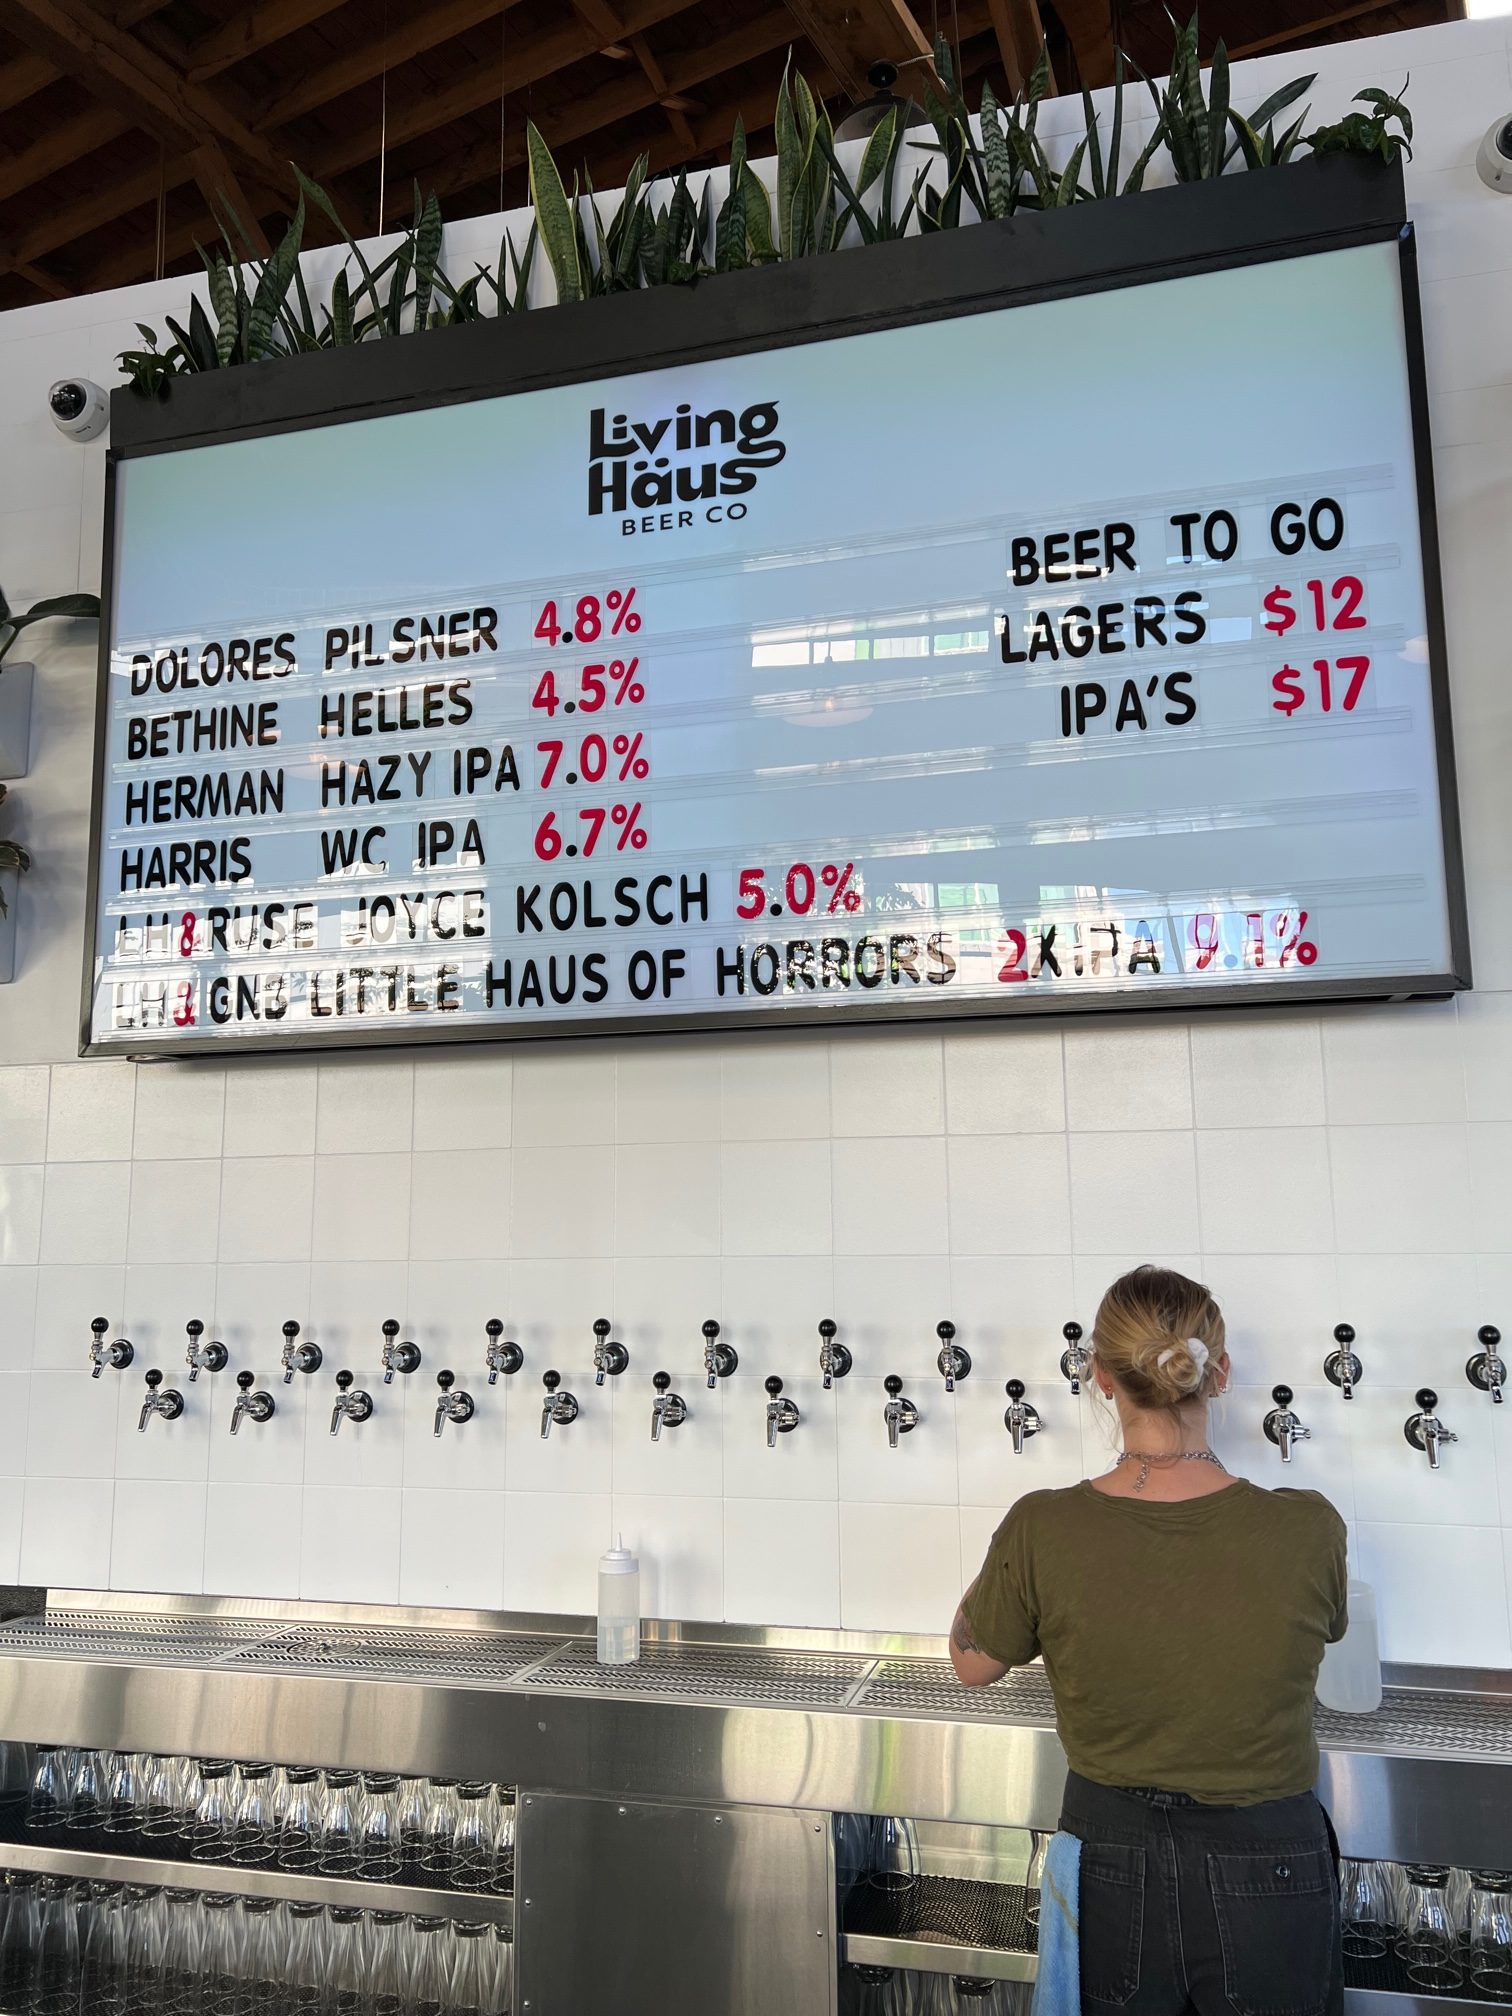 The easy to read beer menu board at Living Haüs Beer Co.